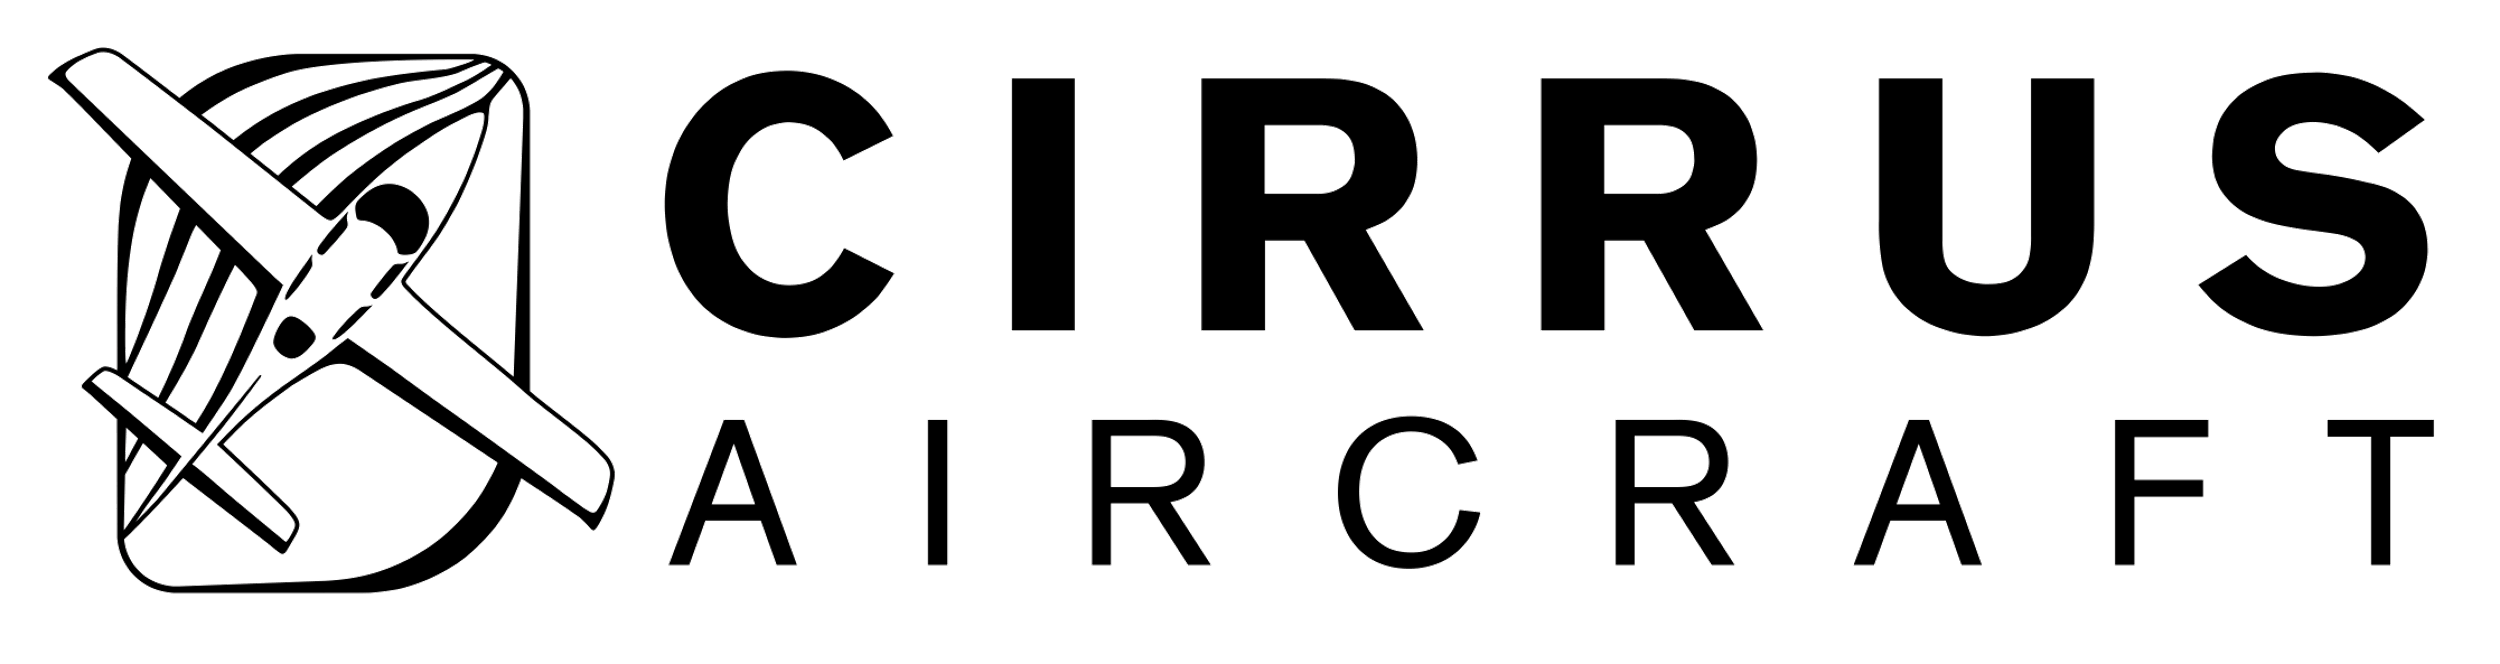 Cirrus Logo - Cirrus Aircraft